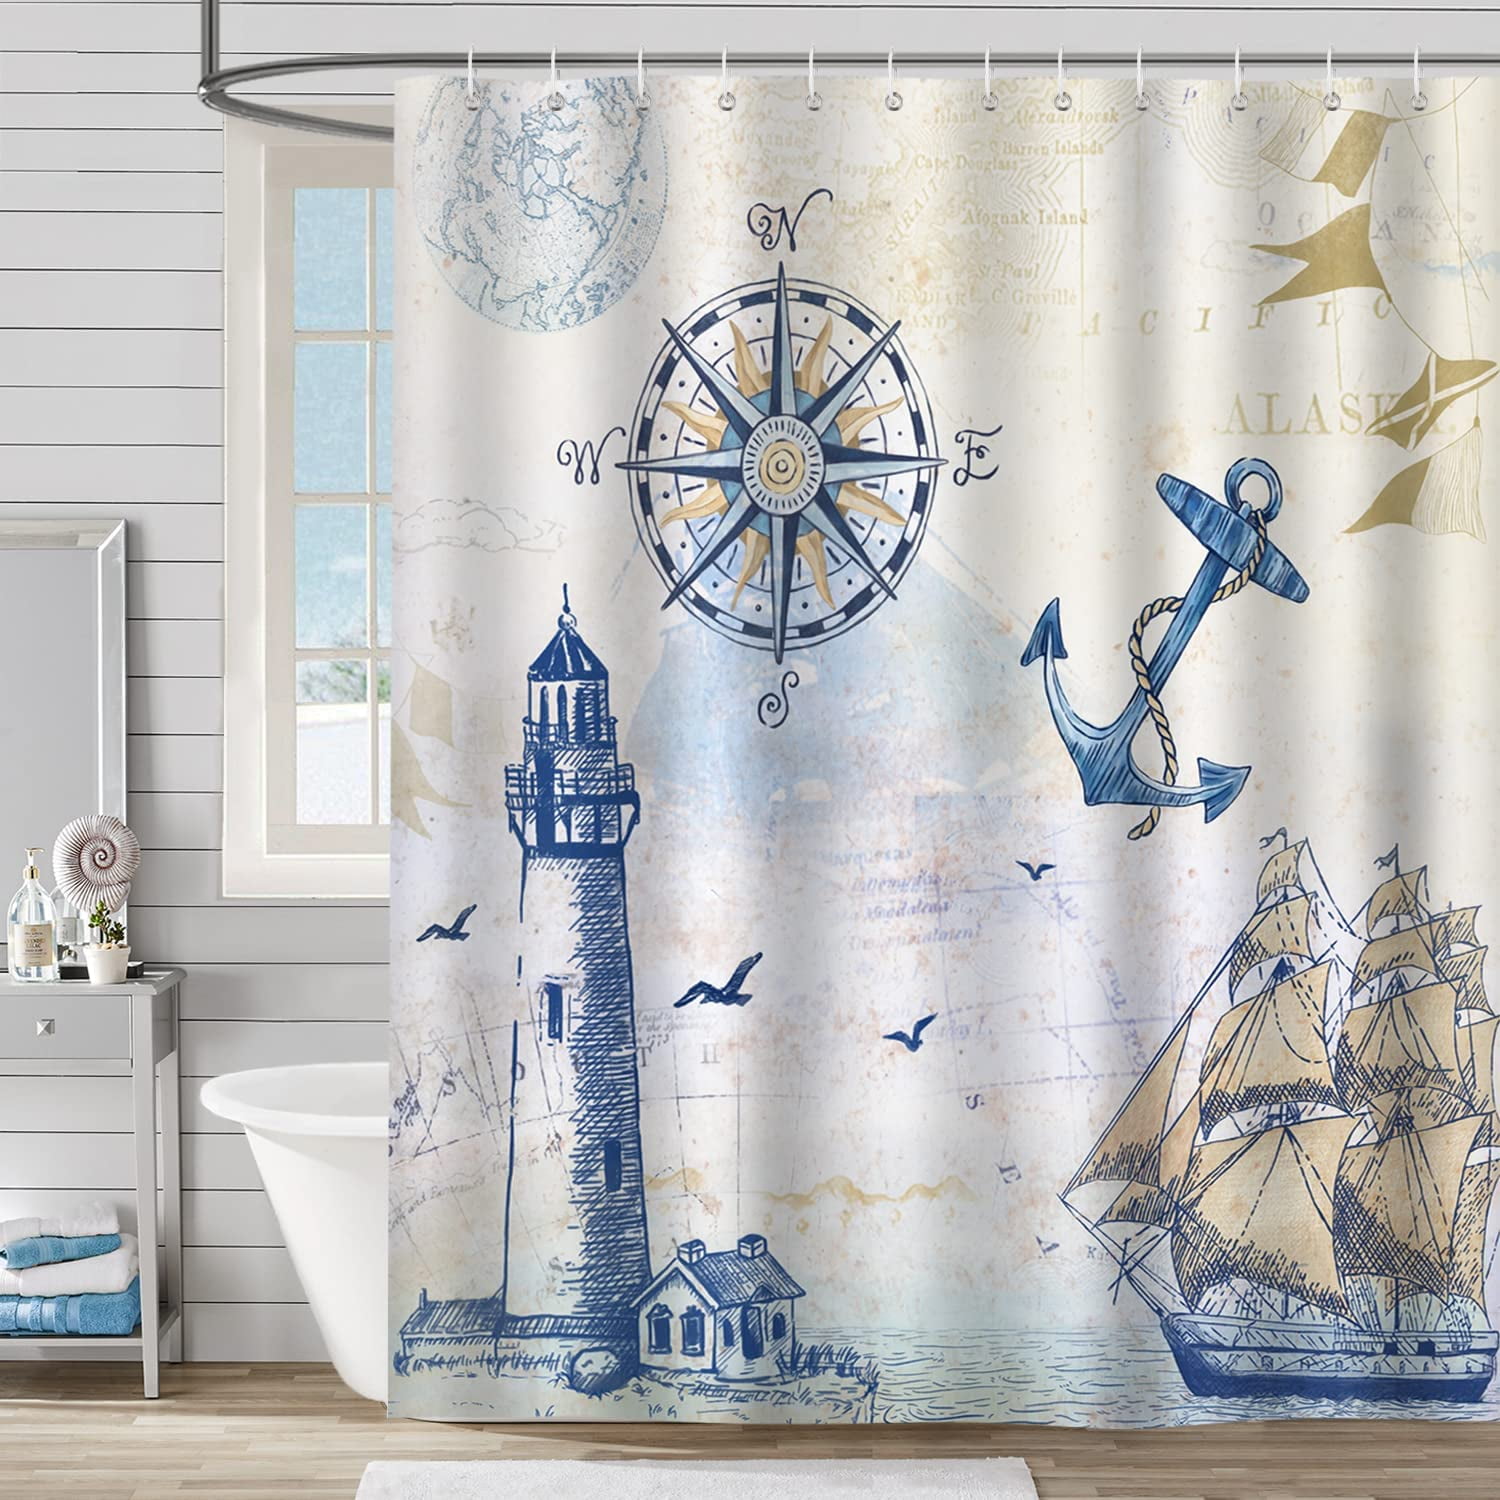 The Baseball Theme  Waterproof Fabric Home Decor Shower Curtain Bathroom Mat 